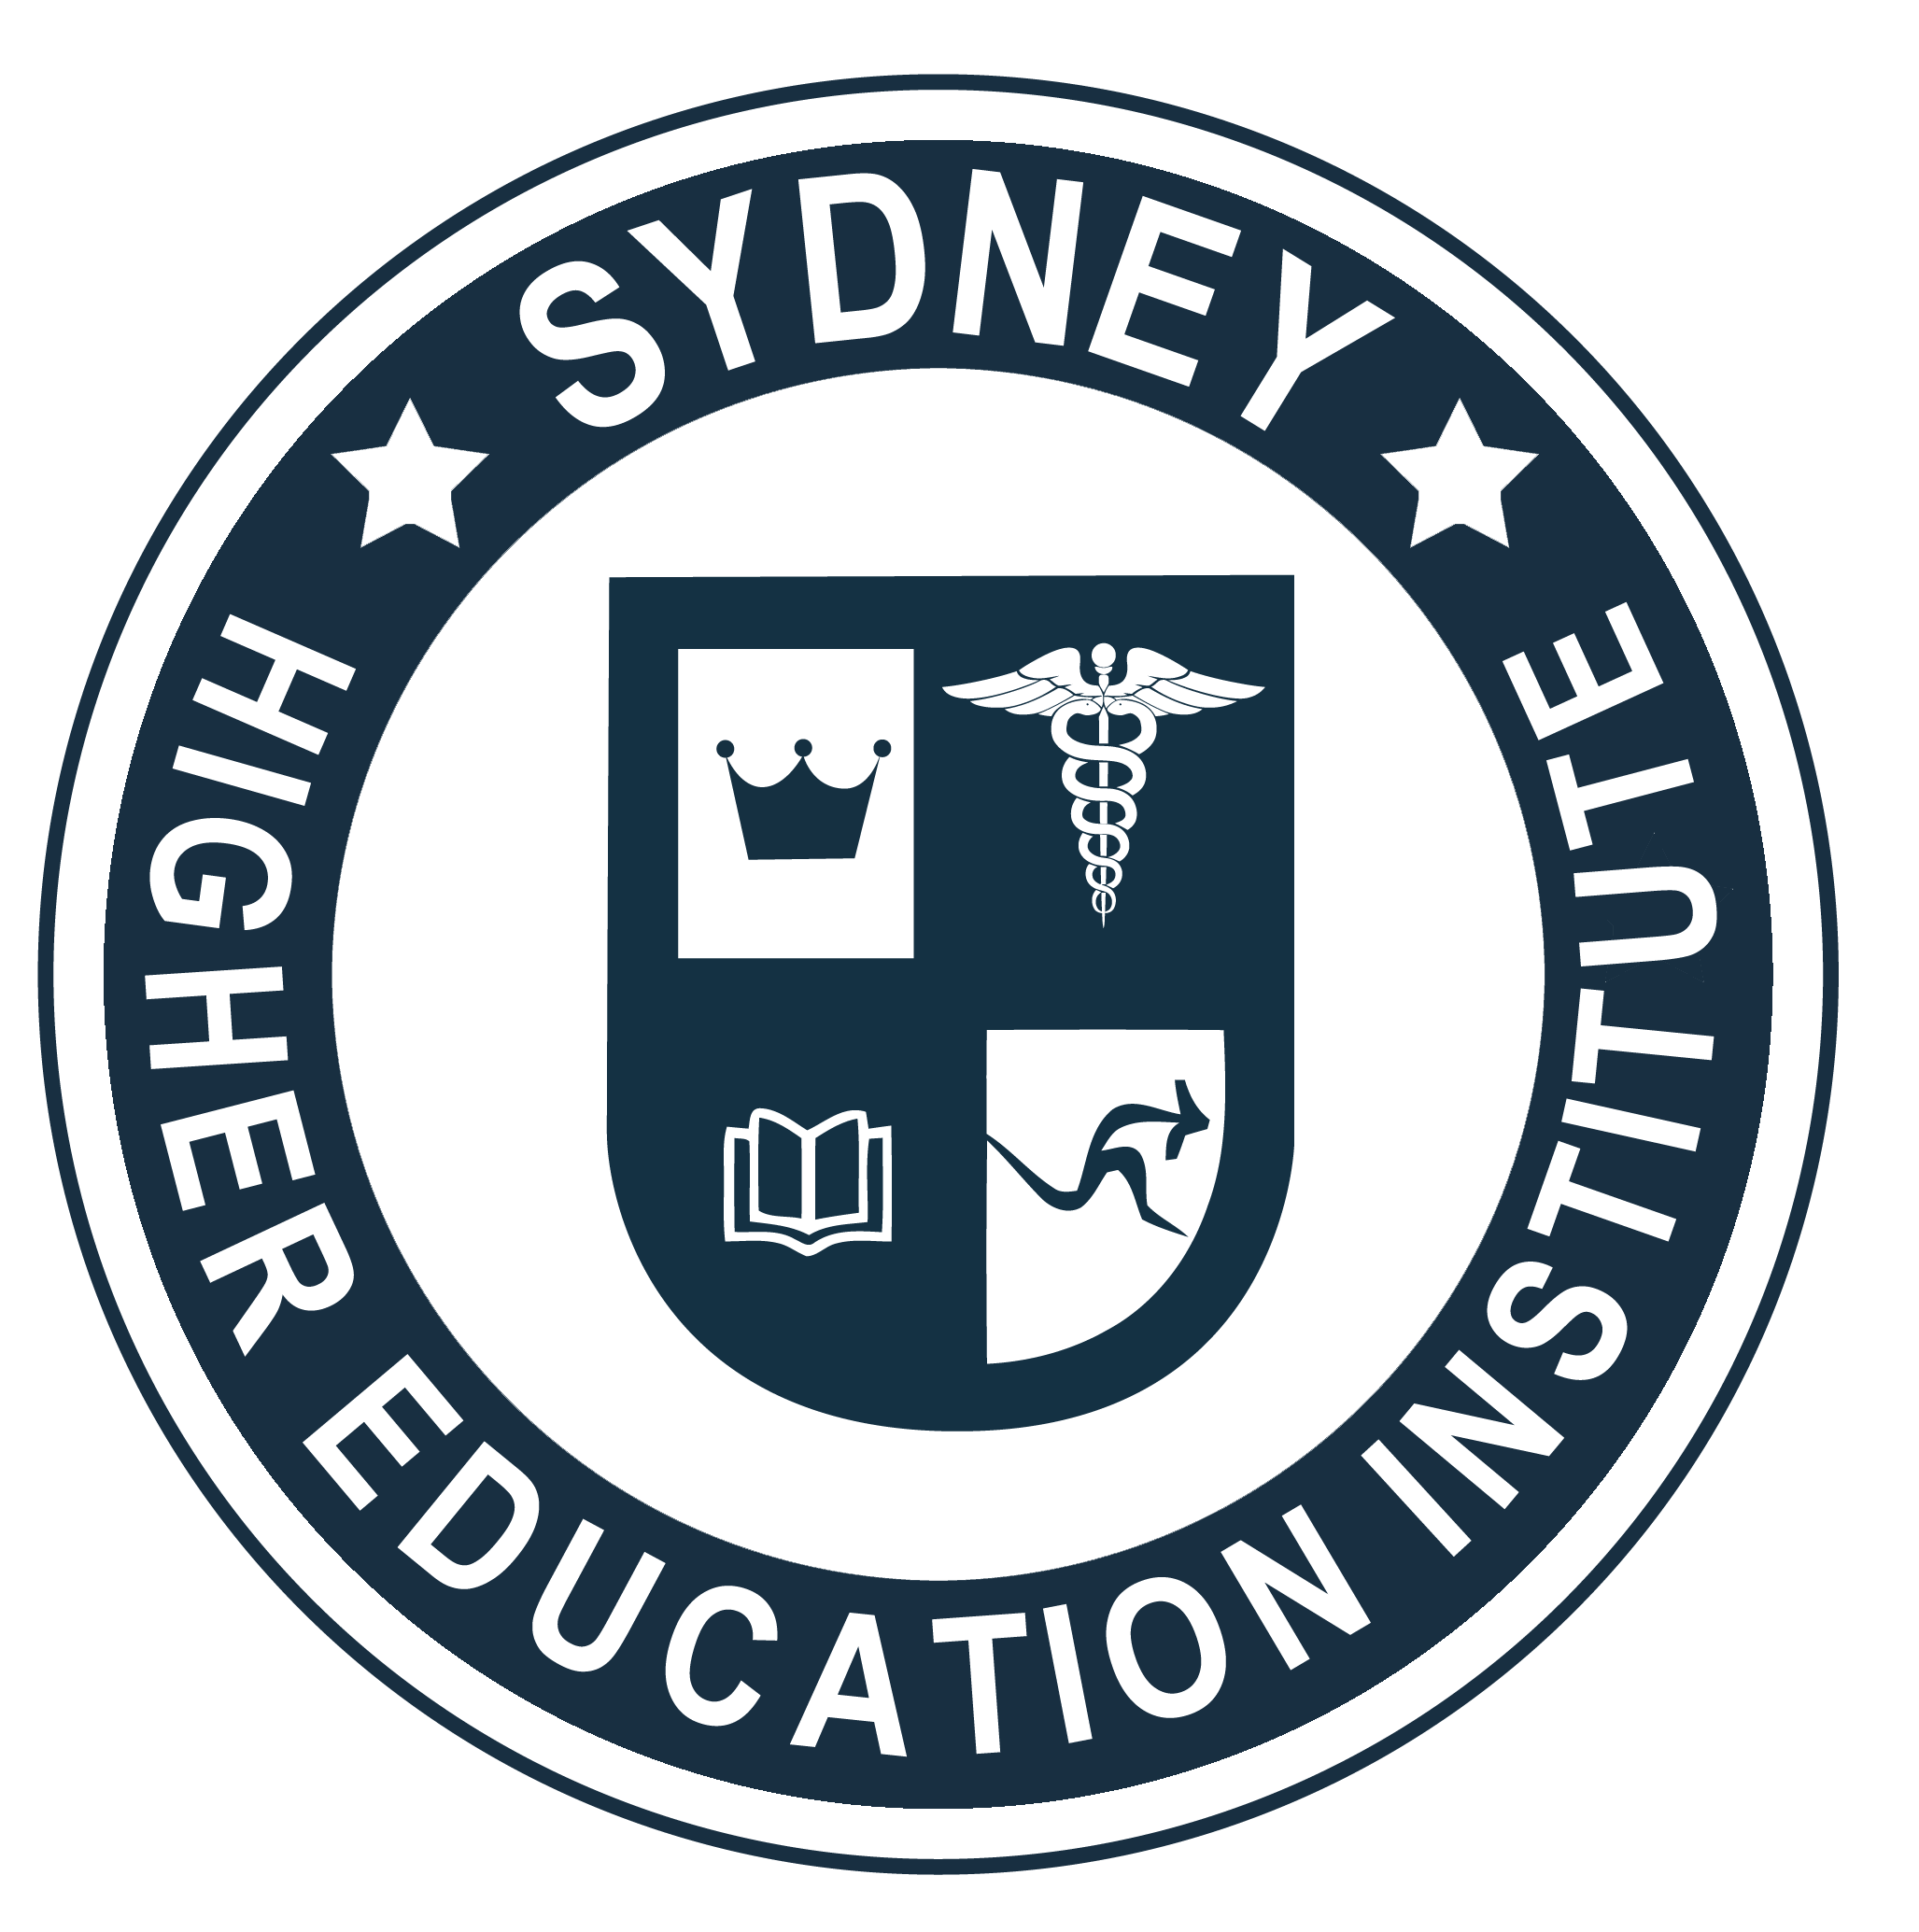 Sydney Higher Education Institute logo